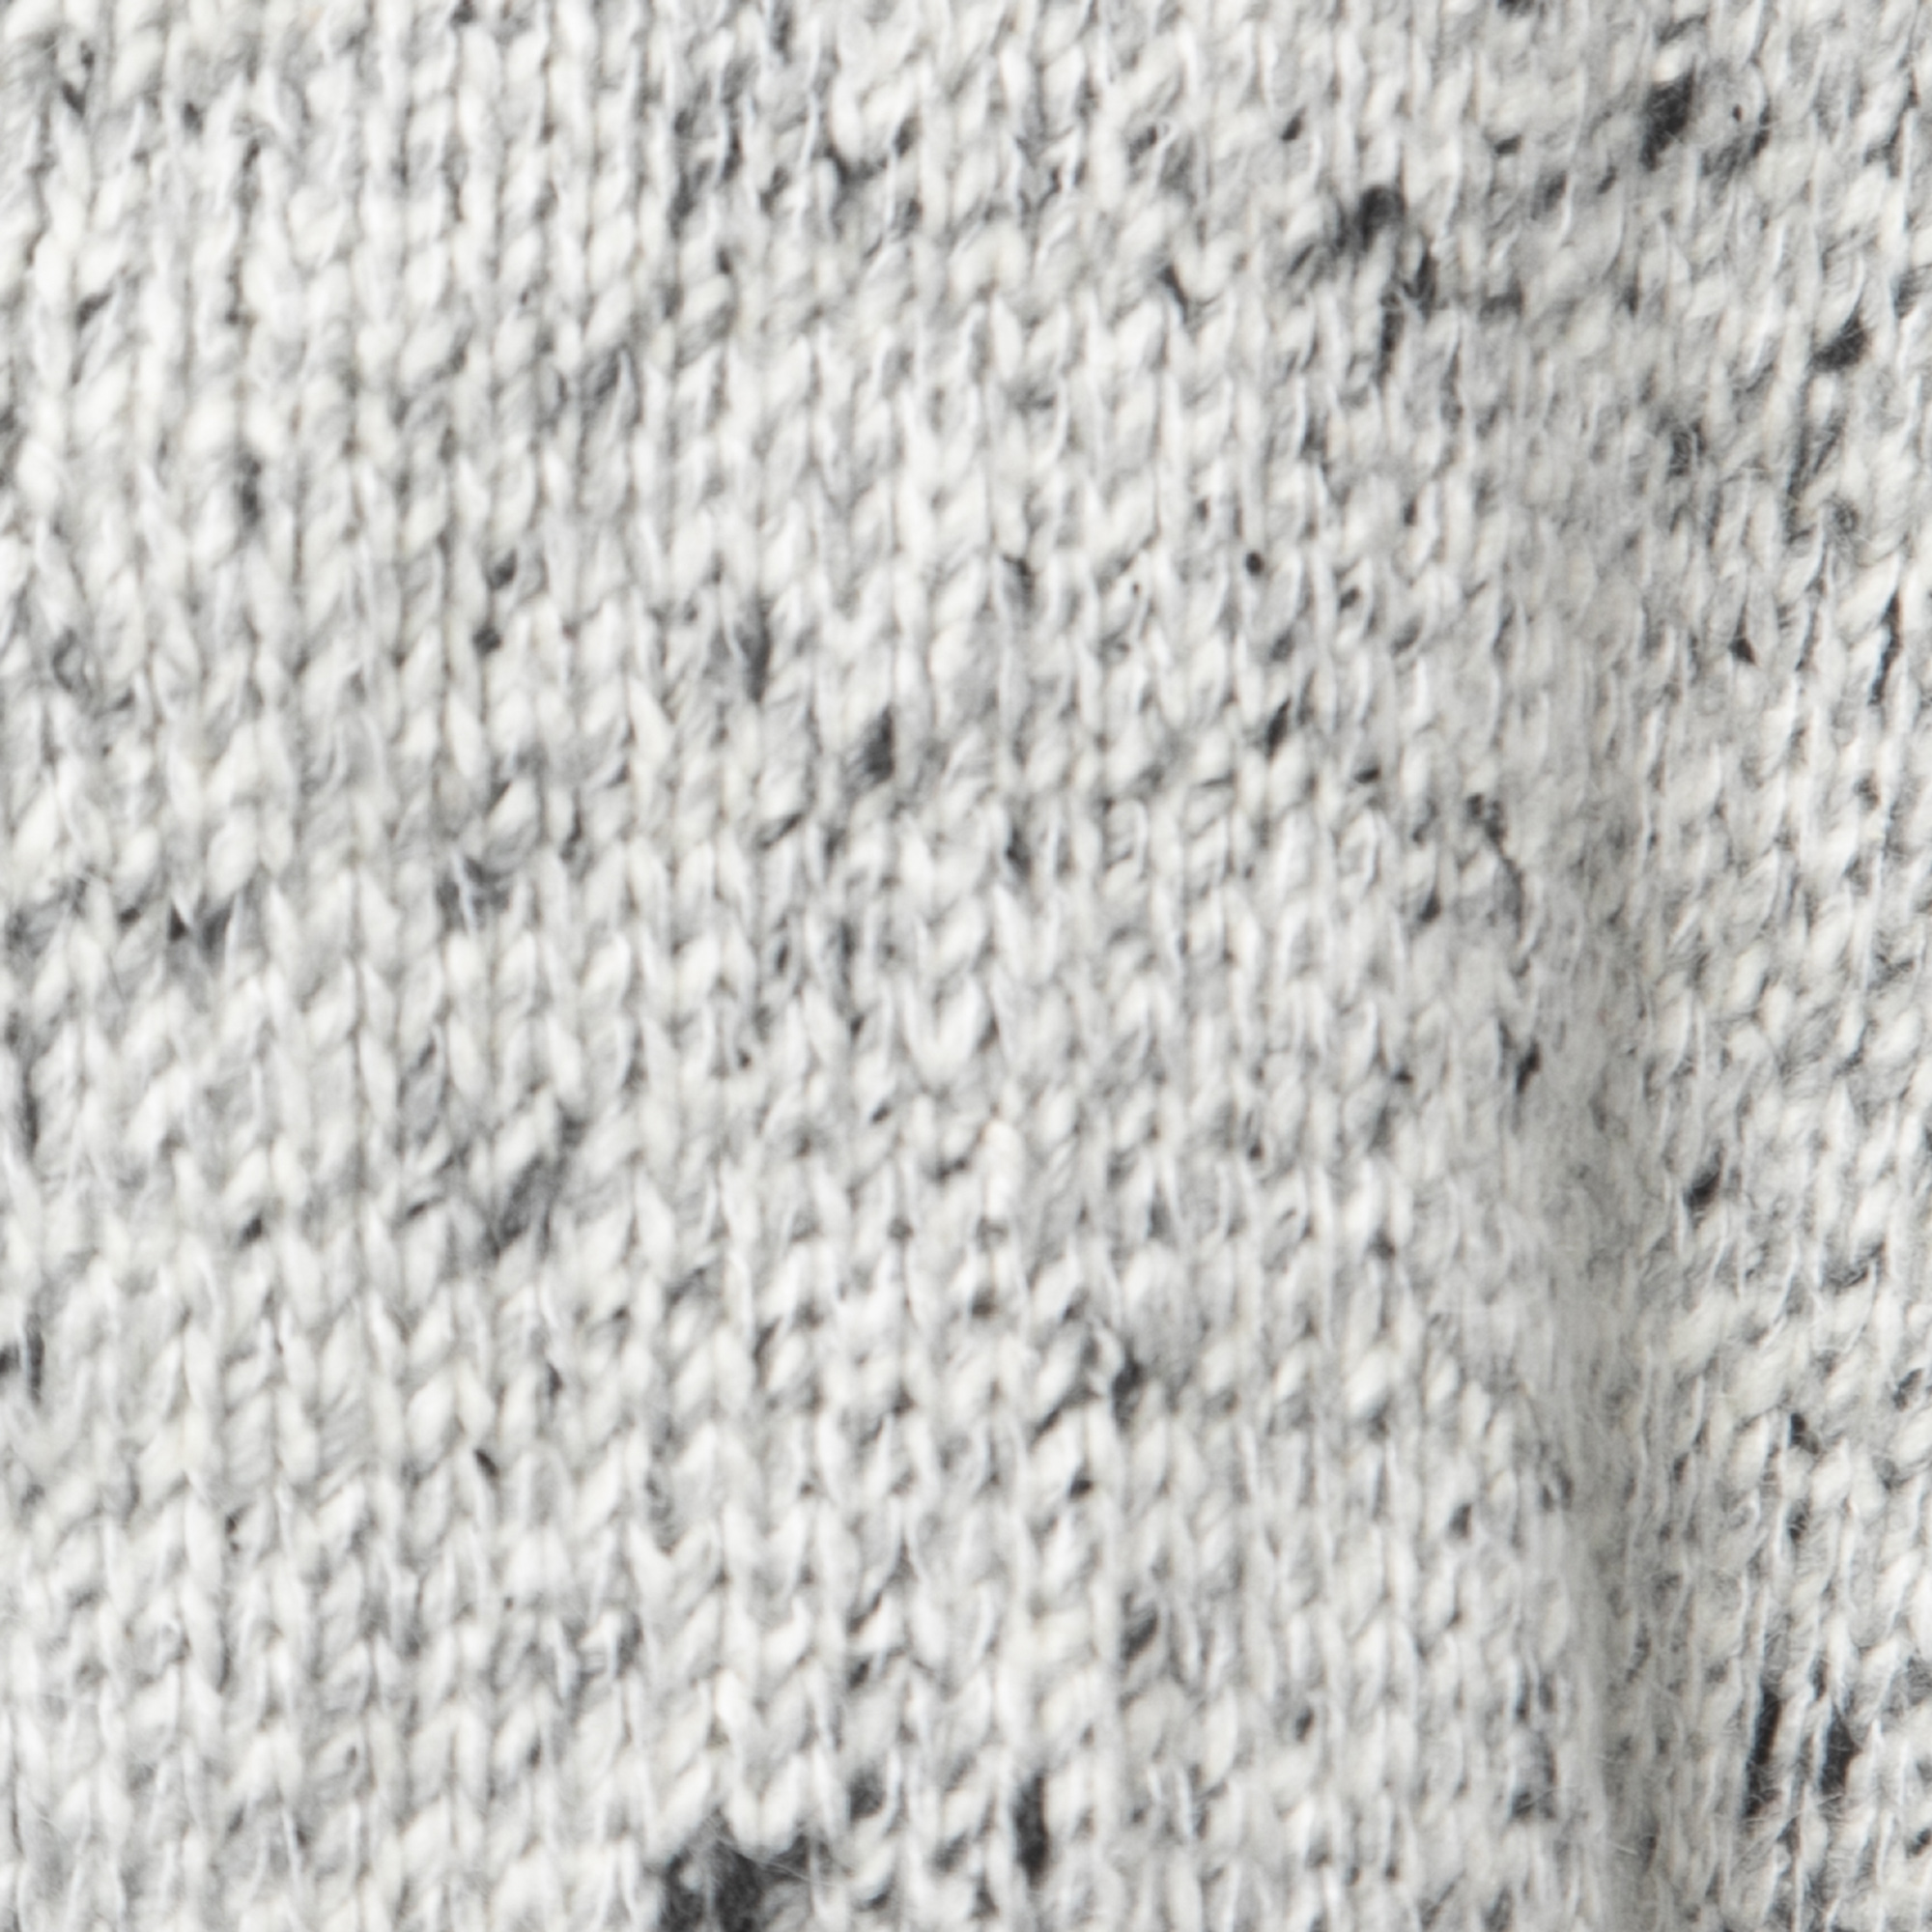 Zadig & Voltaire Grey Knit Open Cardigan XS/S